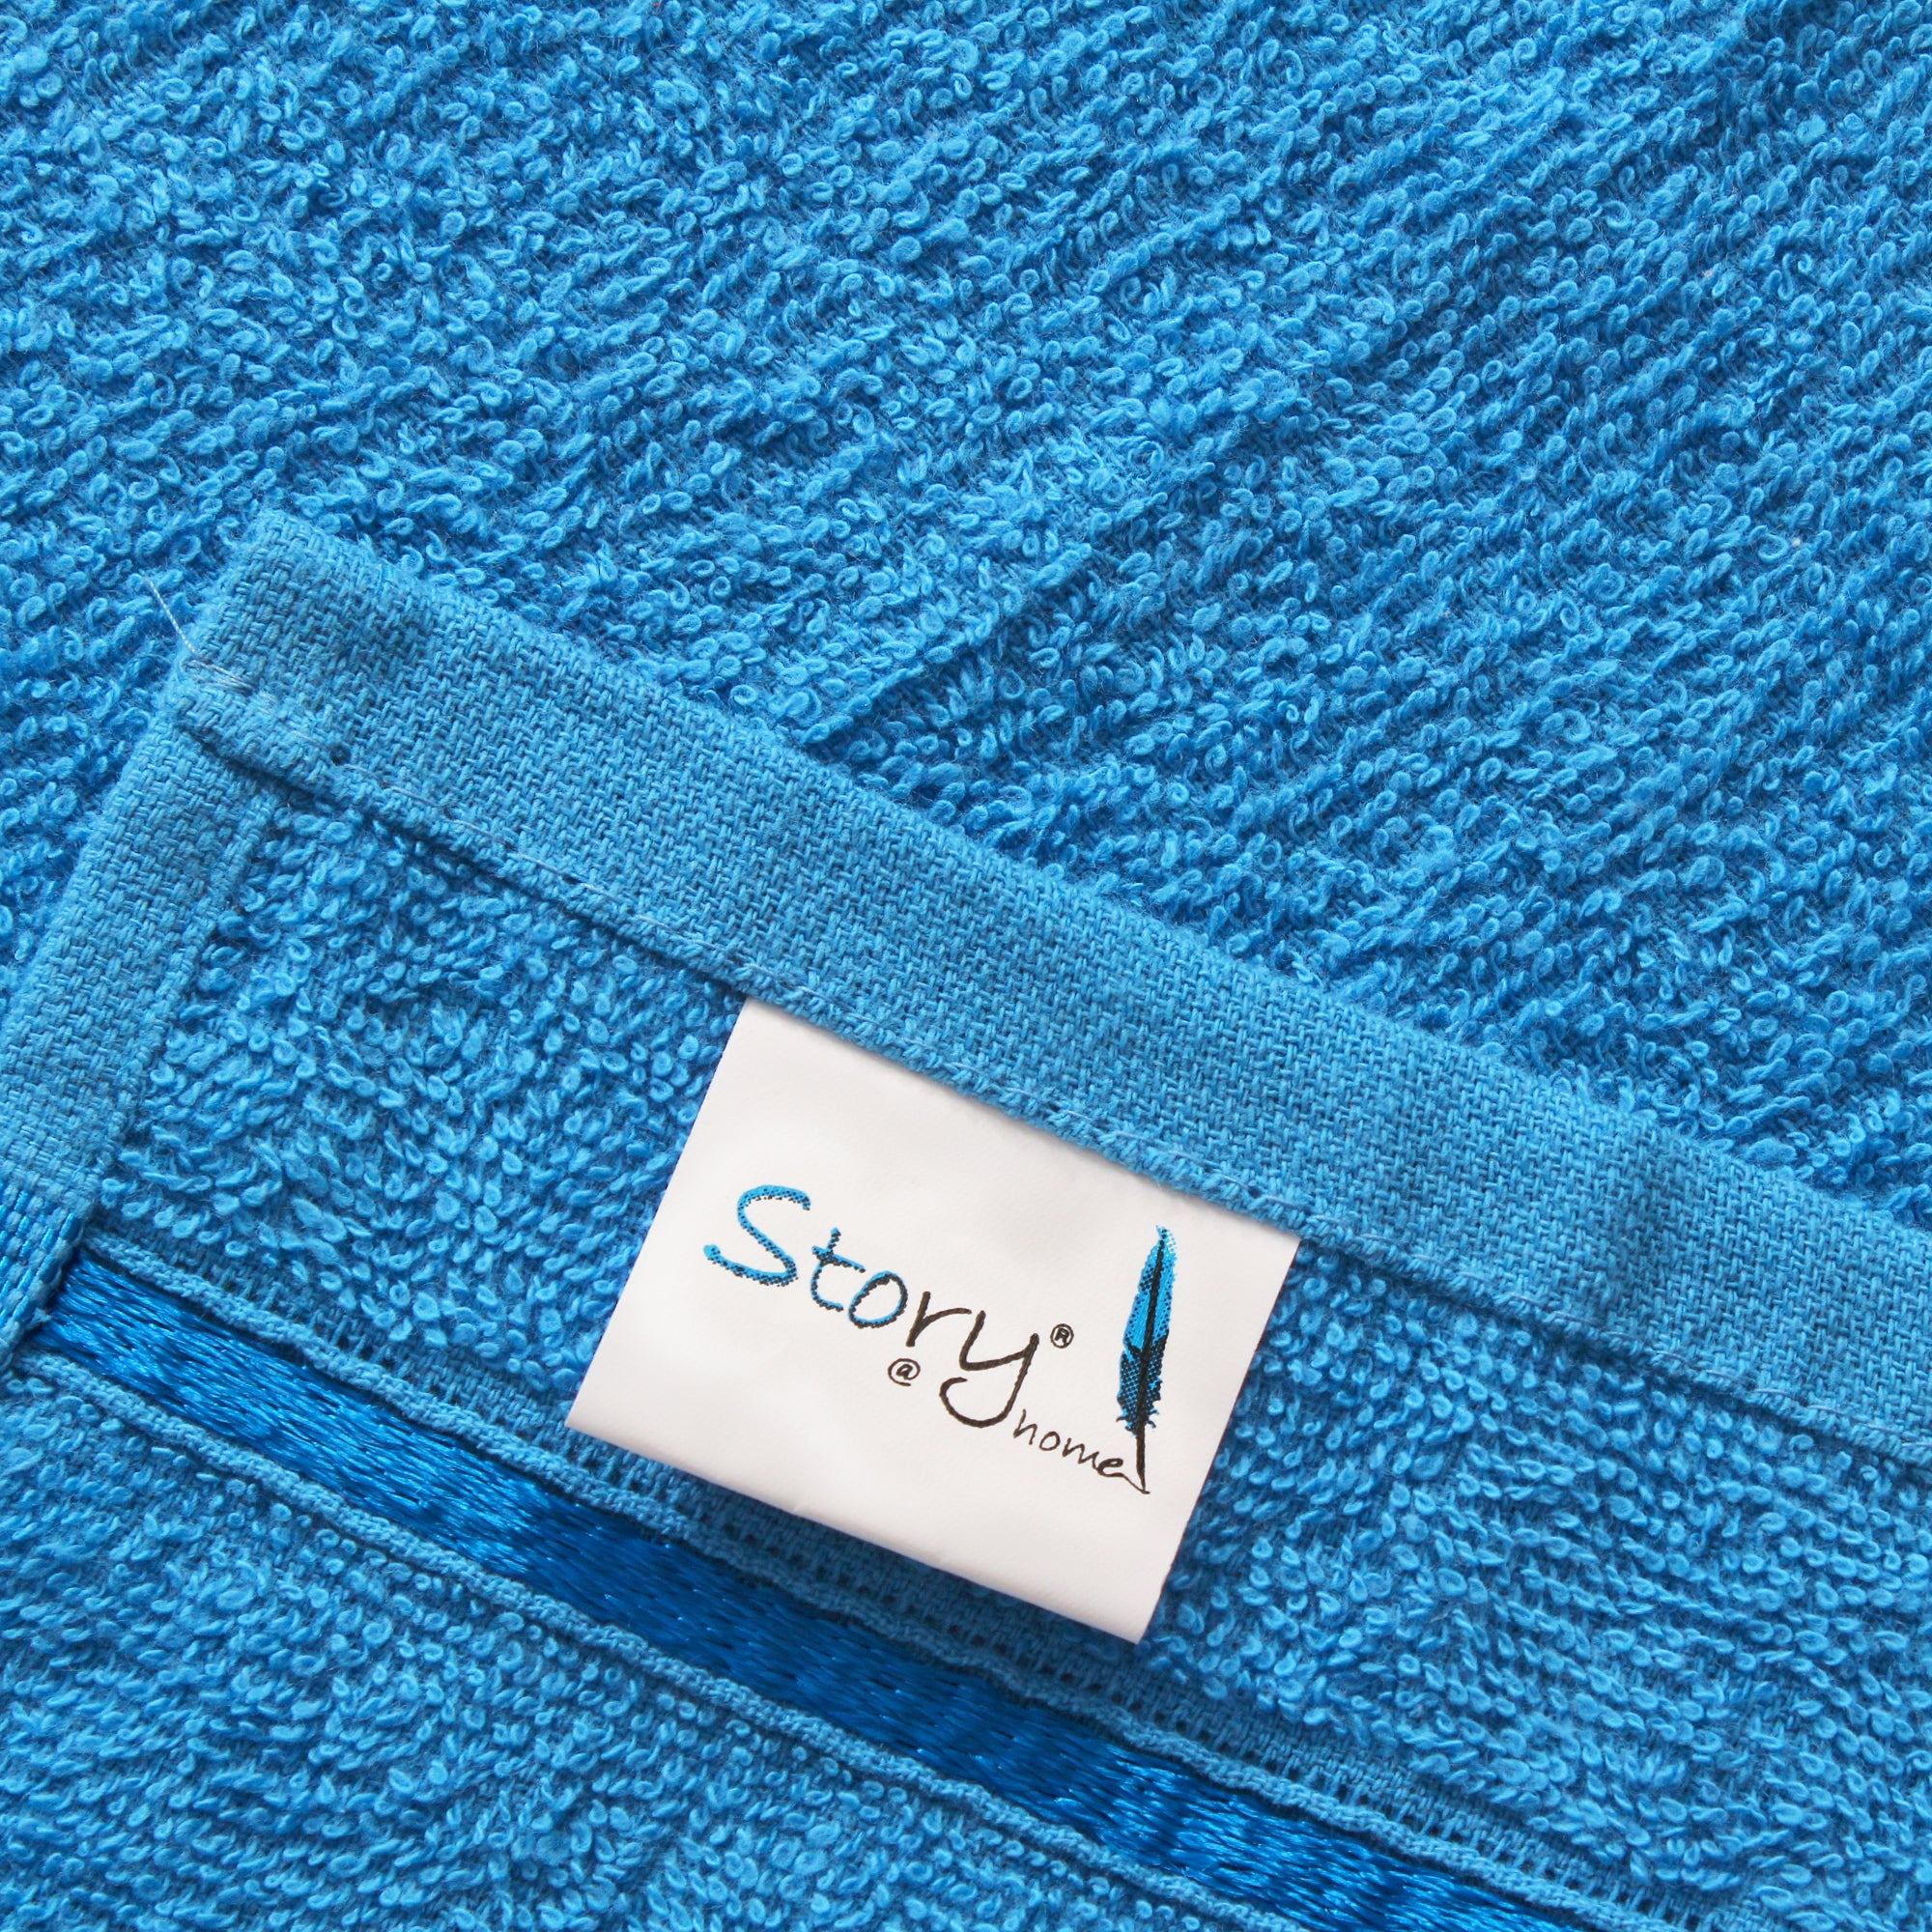 Story@Home 30 Units 100% Cotton Face Towels - Blue